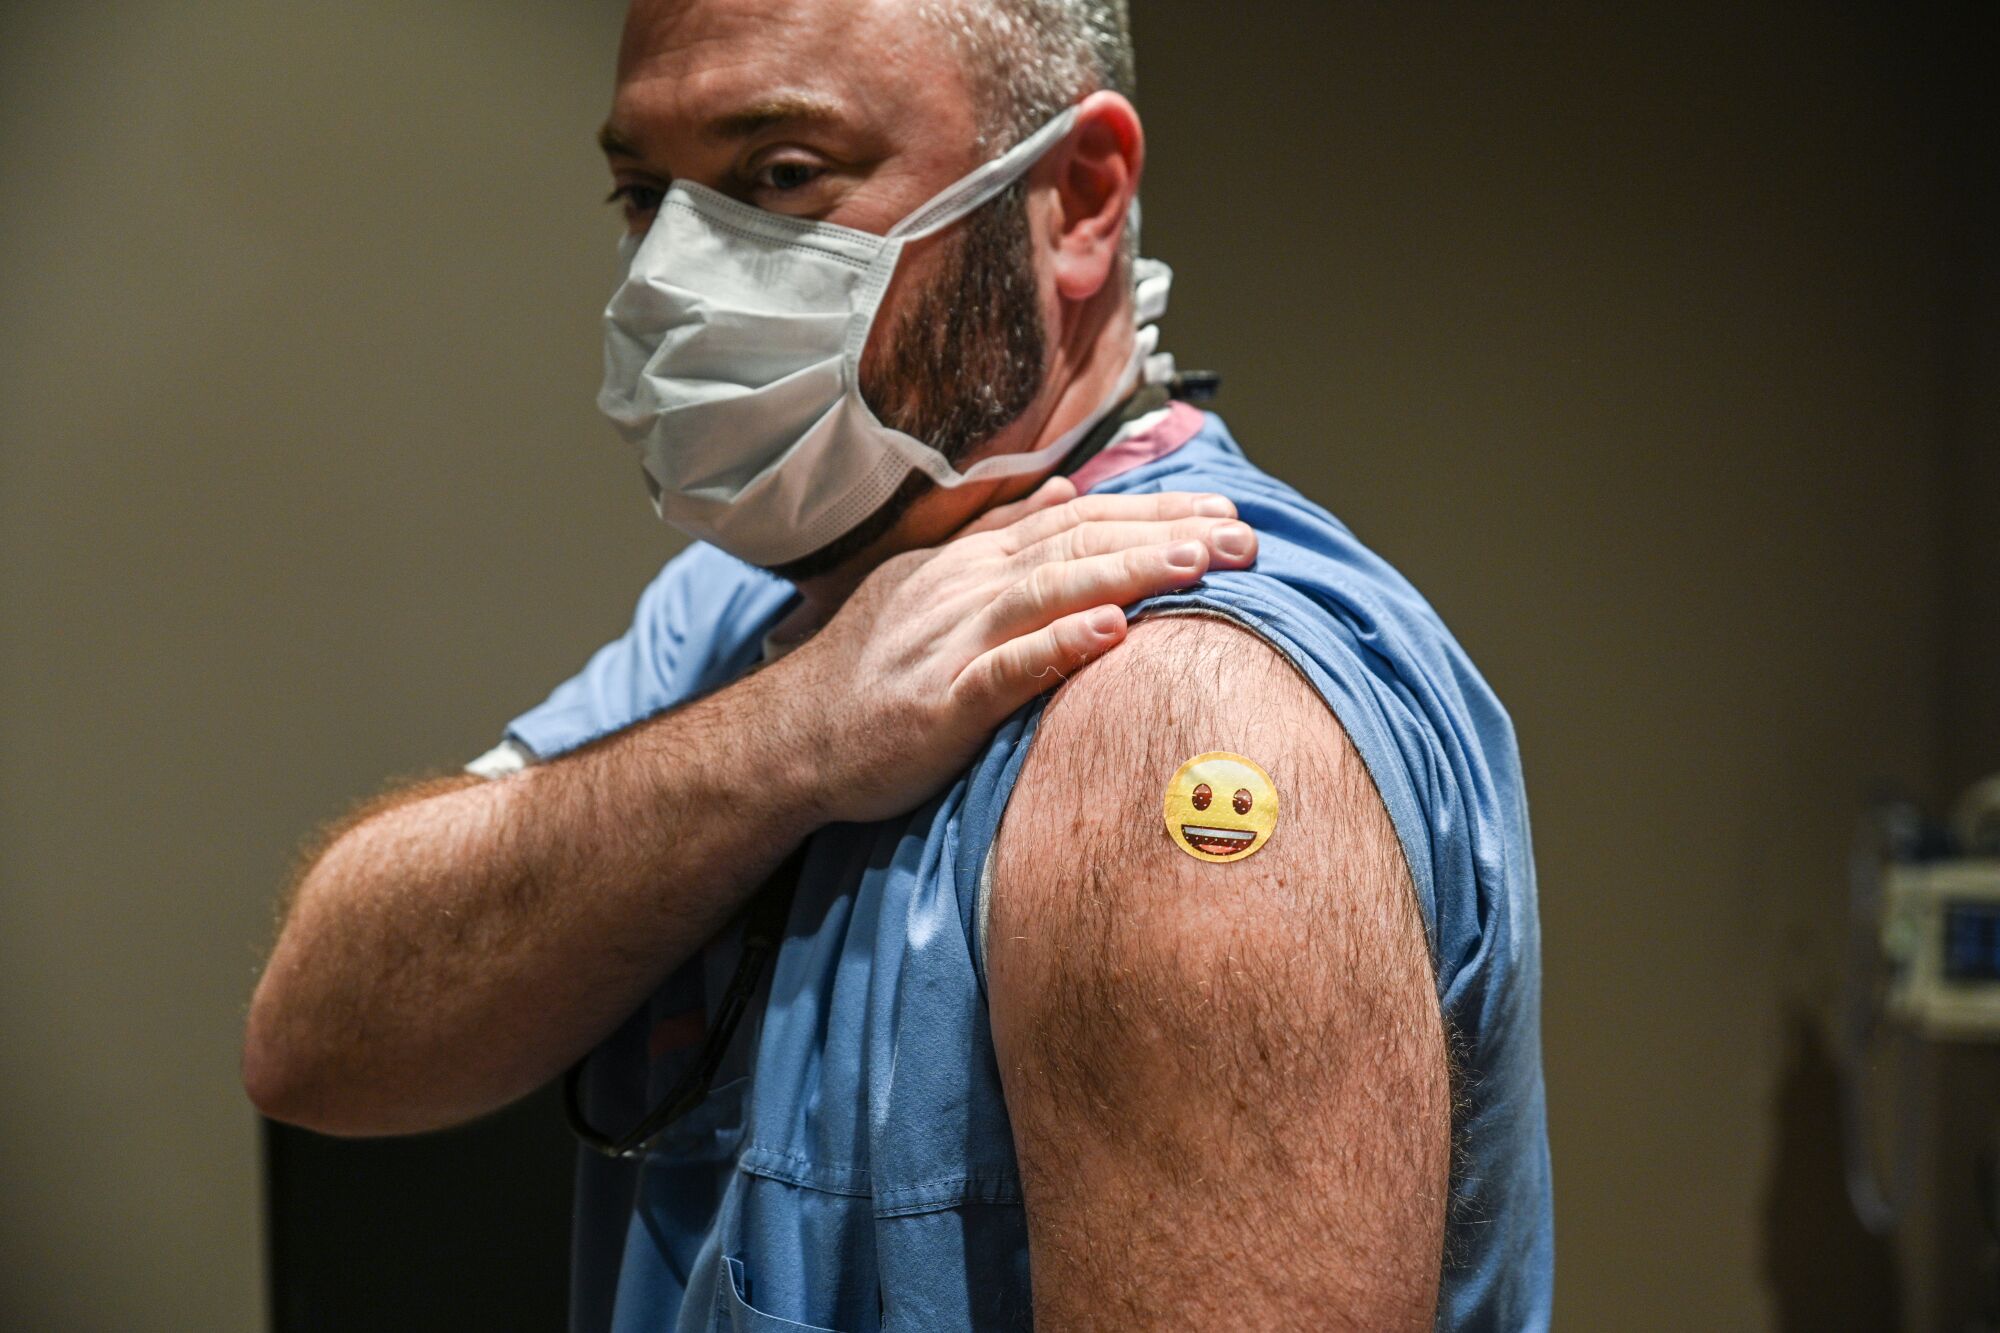 Dr. Jason Smith displays a smiley bandage on his shoulder